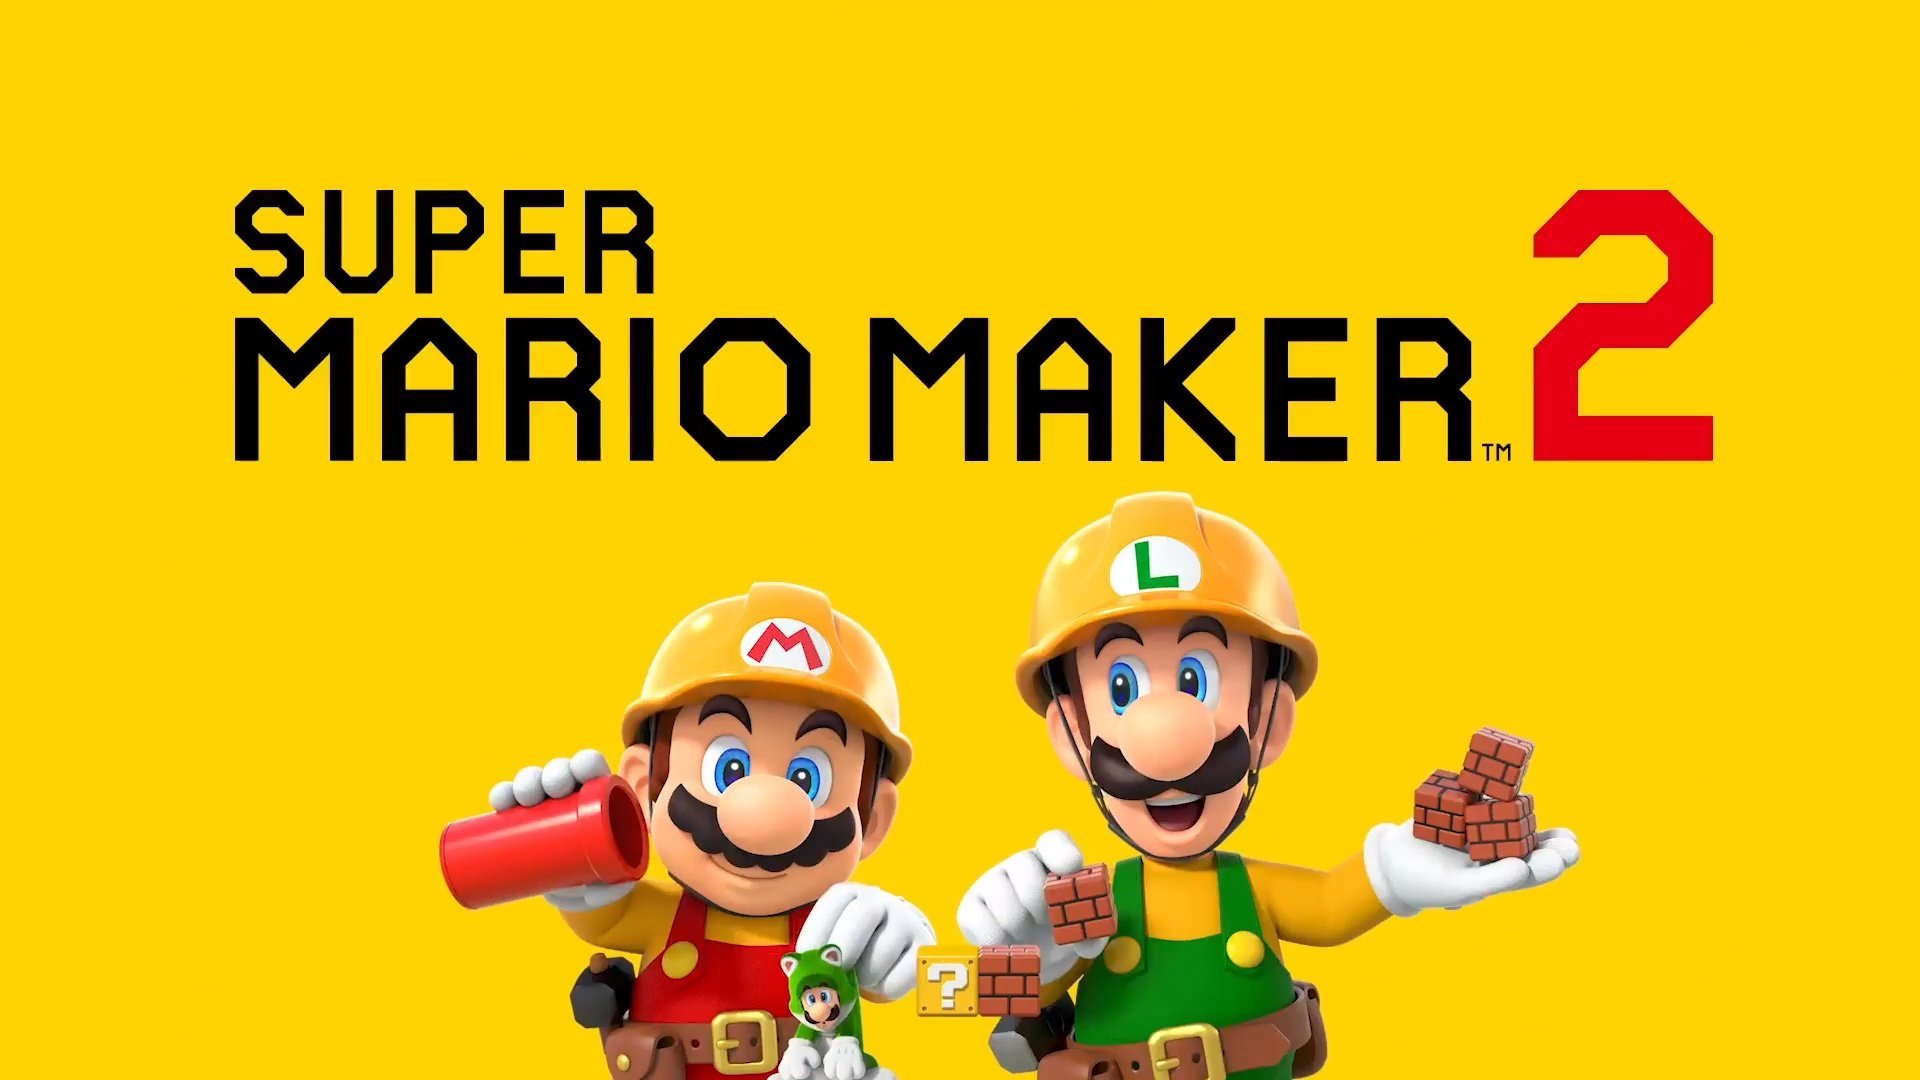 Super Mario Maker 2 อัปเดตให้เล่นออนไลน์กับเพื่อนได้แล้ว!